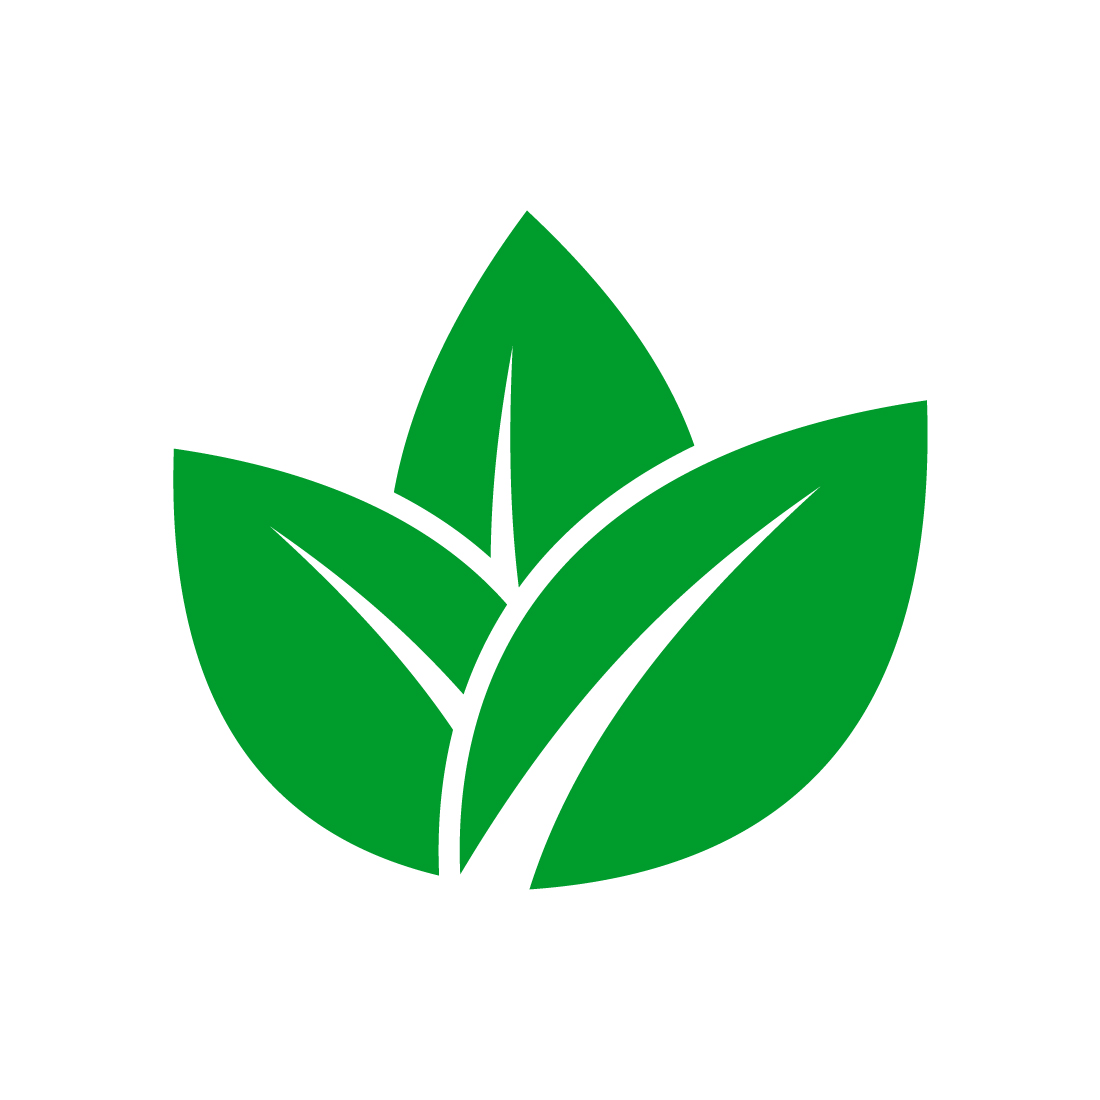 Leaf, plant, logo Green leaves, nature symbol, Vector design template preview image.